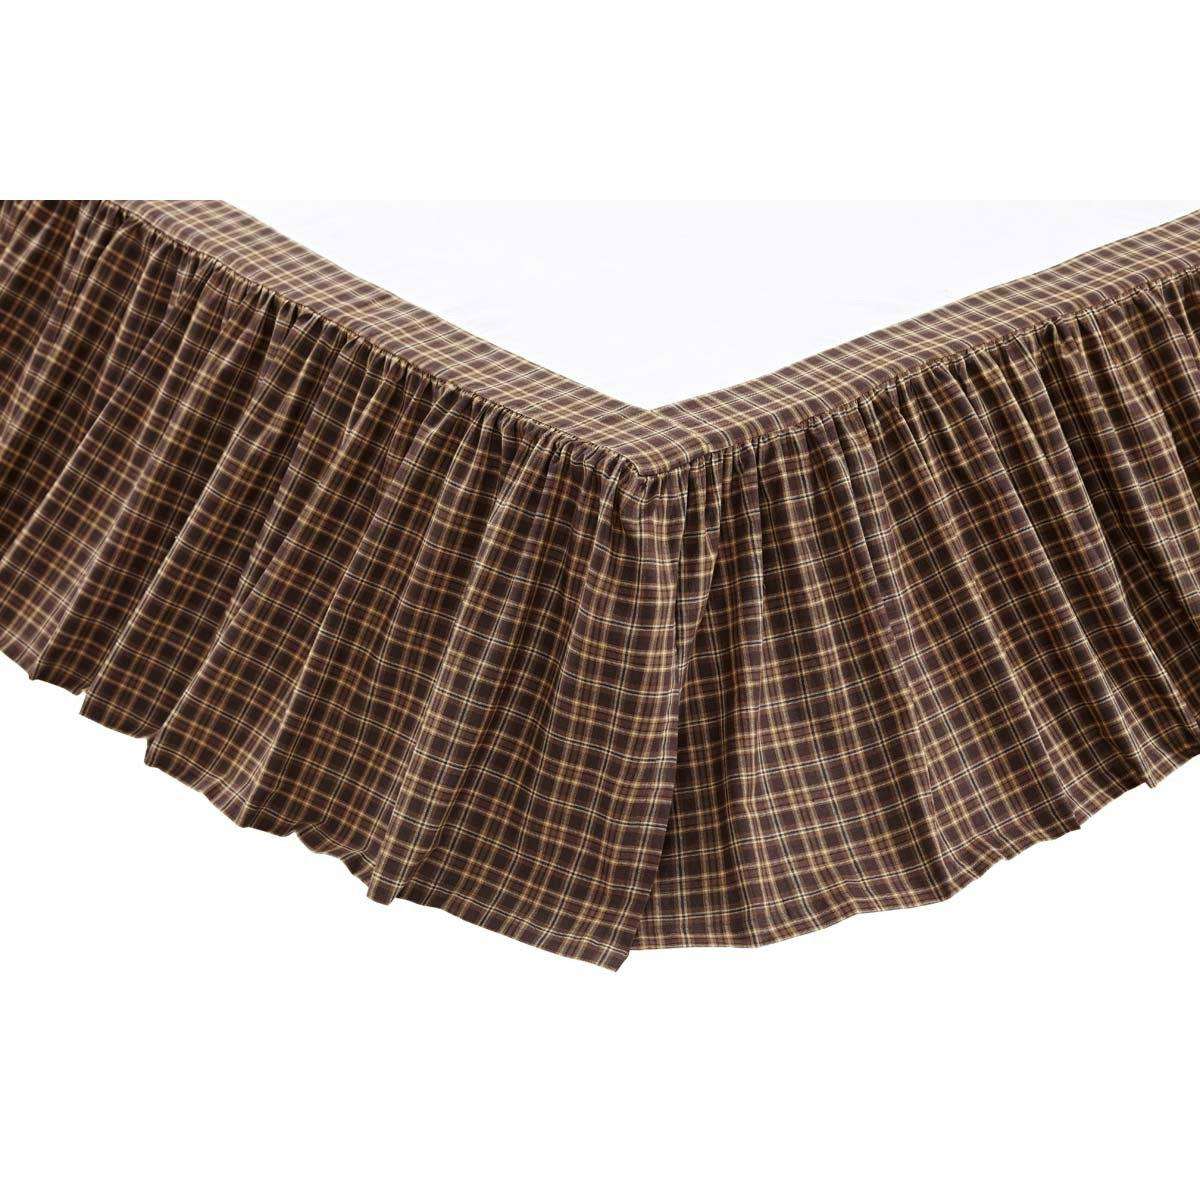 Prescott Bed Skirts Dark Brown, Light Tan, Creme VHC Brands - The Fox Decor